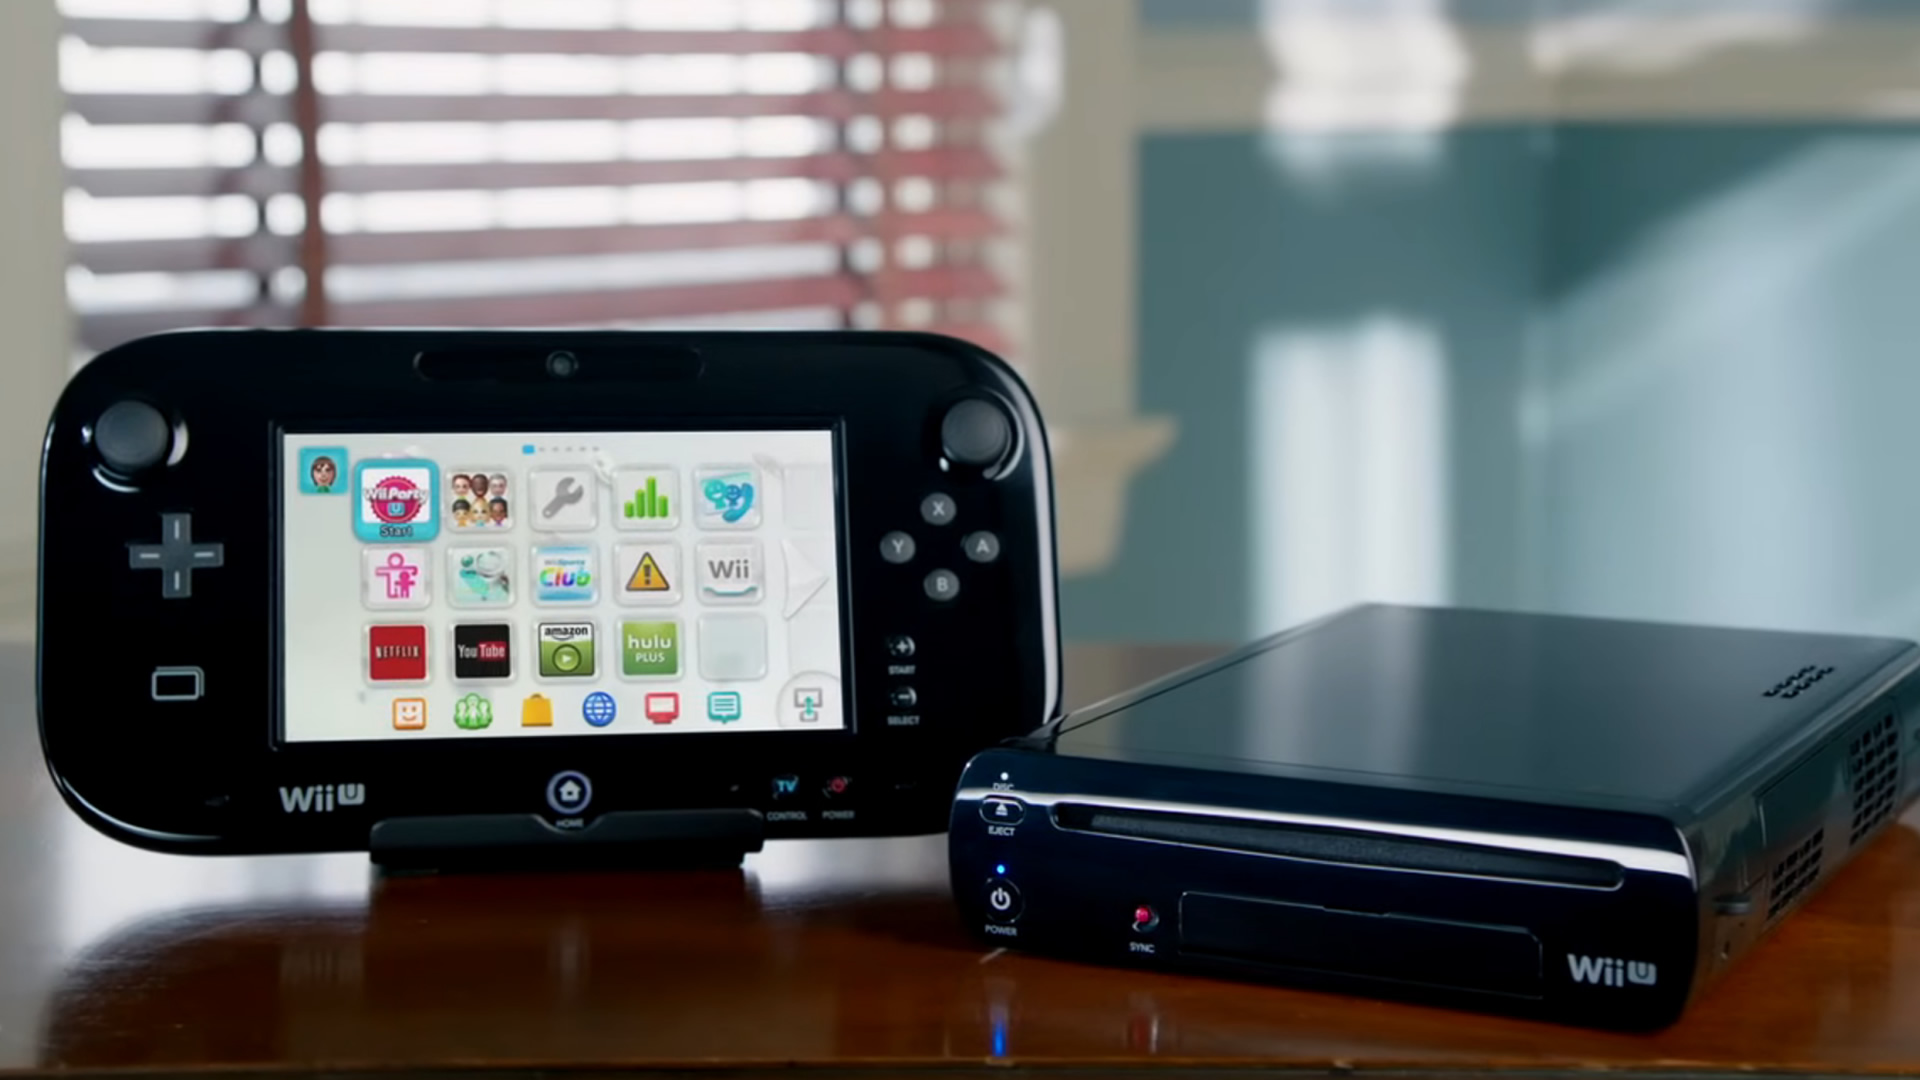 7 Must-Have Wii U Exclusive Games - TeeChu